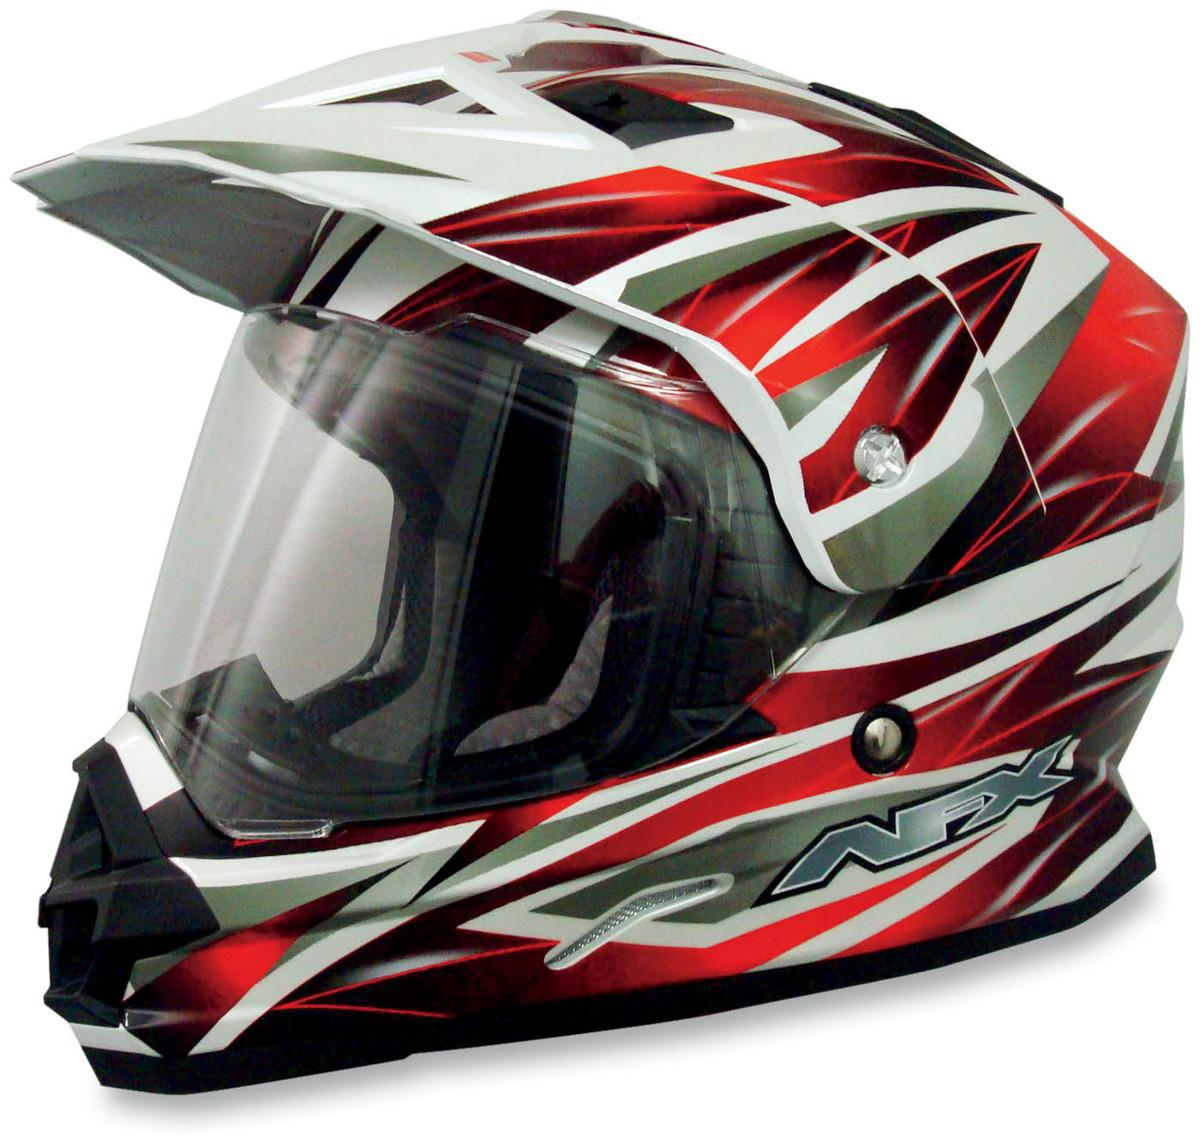 Afx fx-39 dual sport helmet multi red